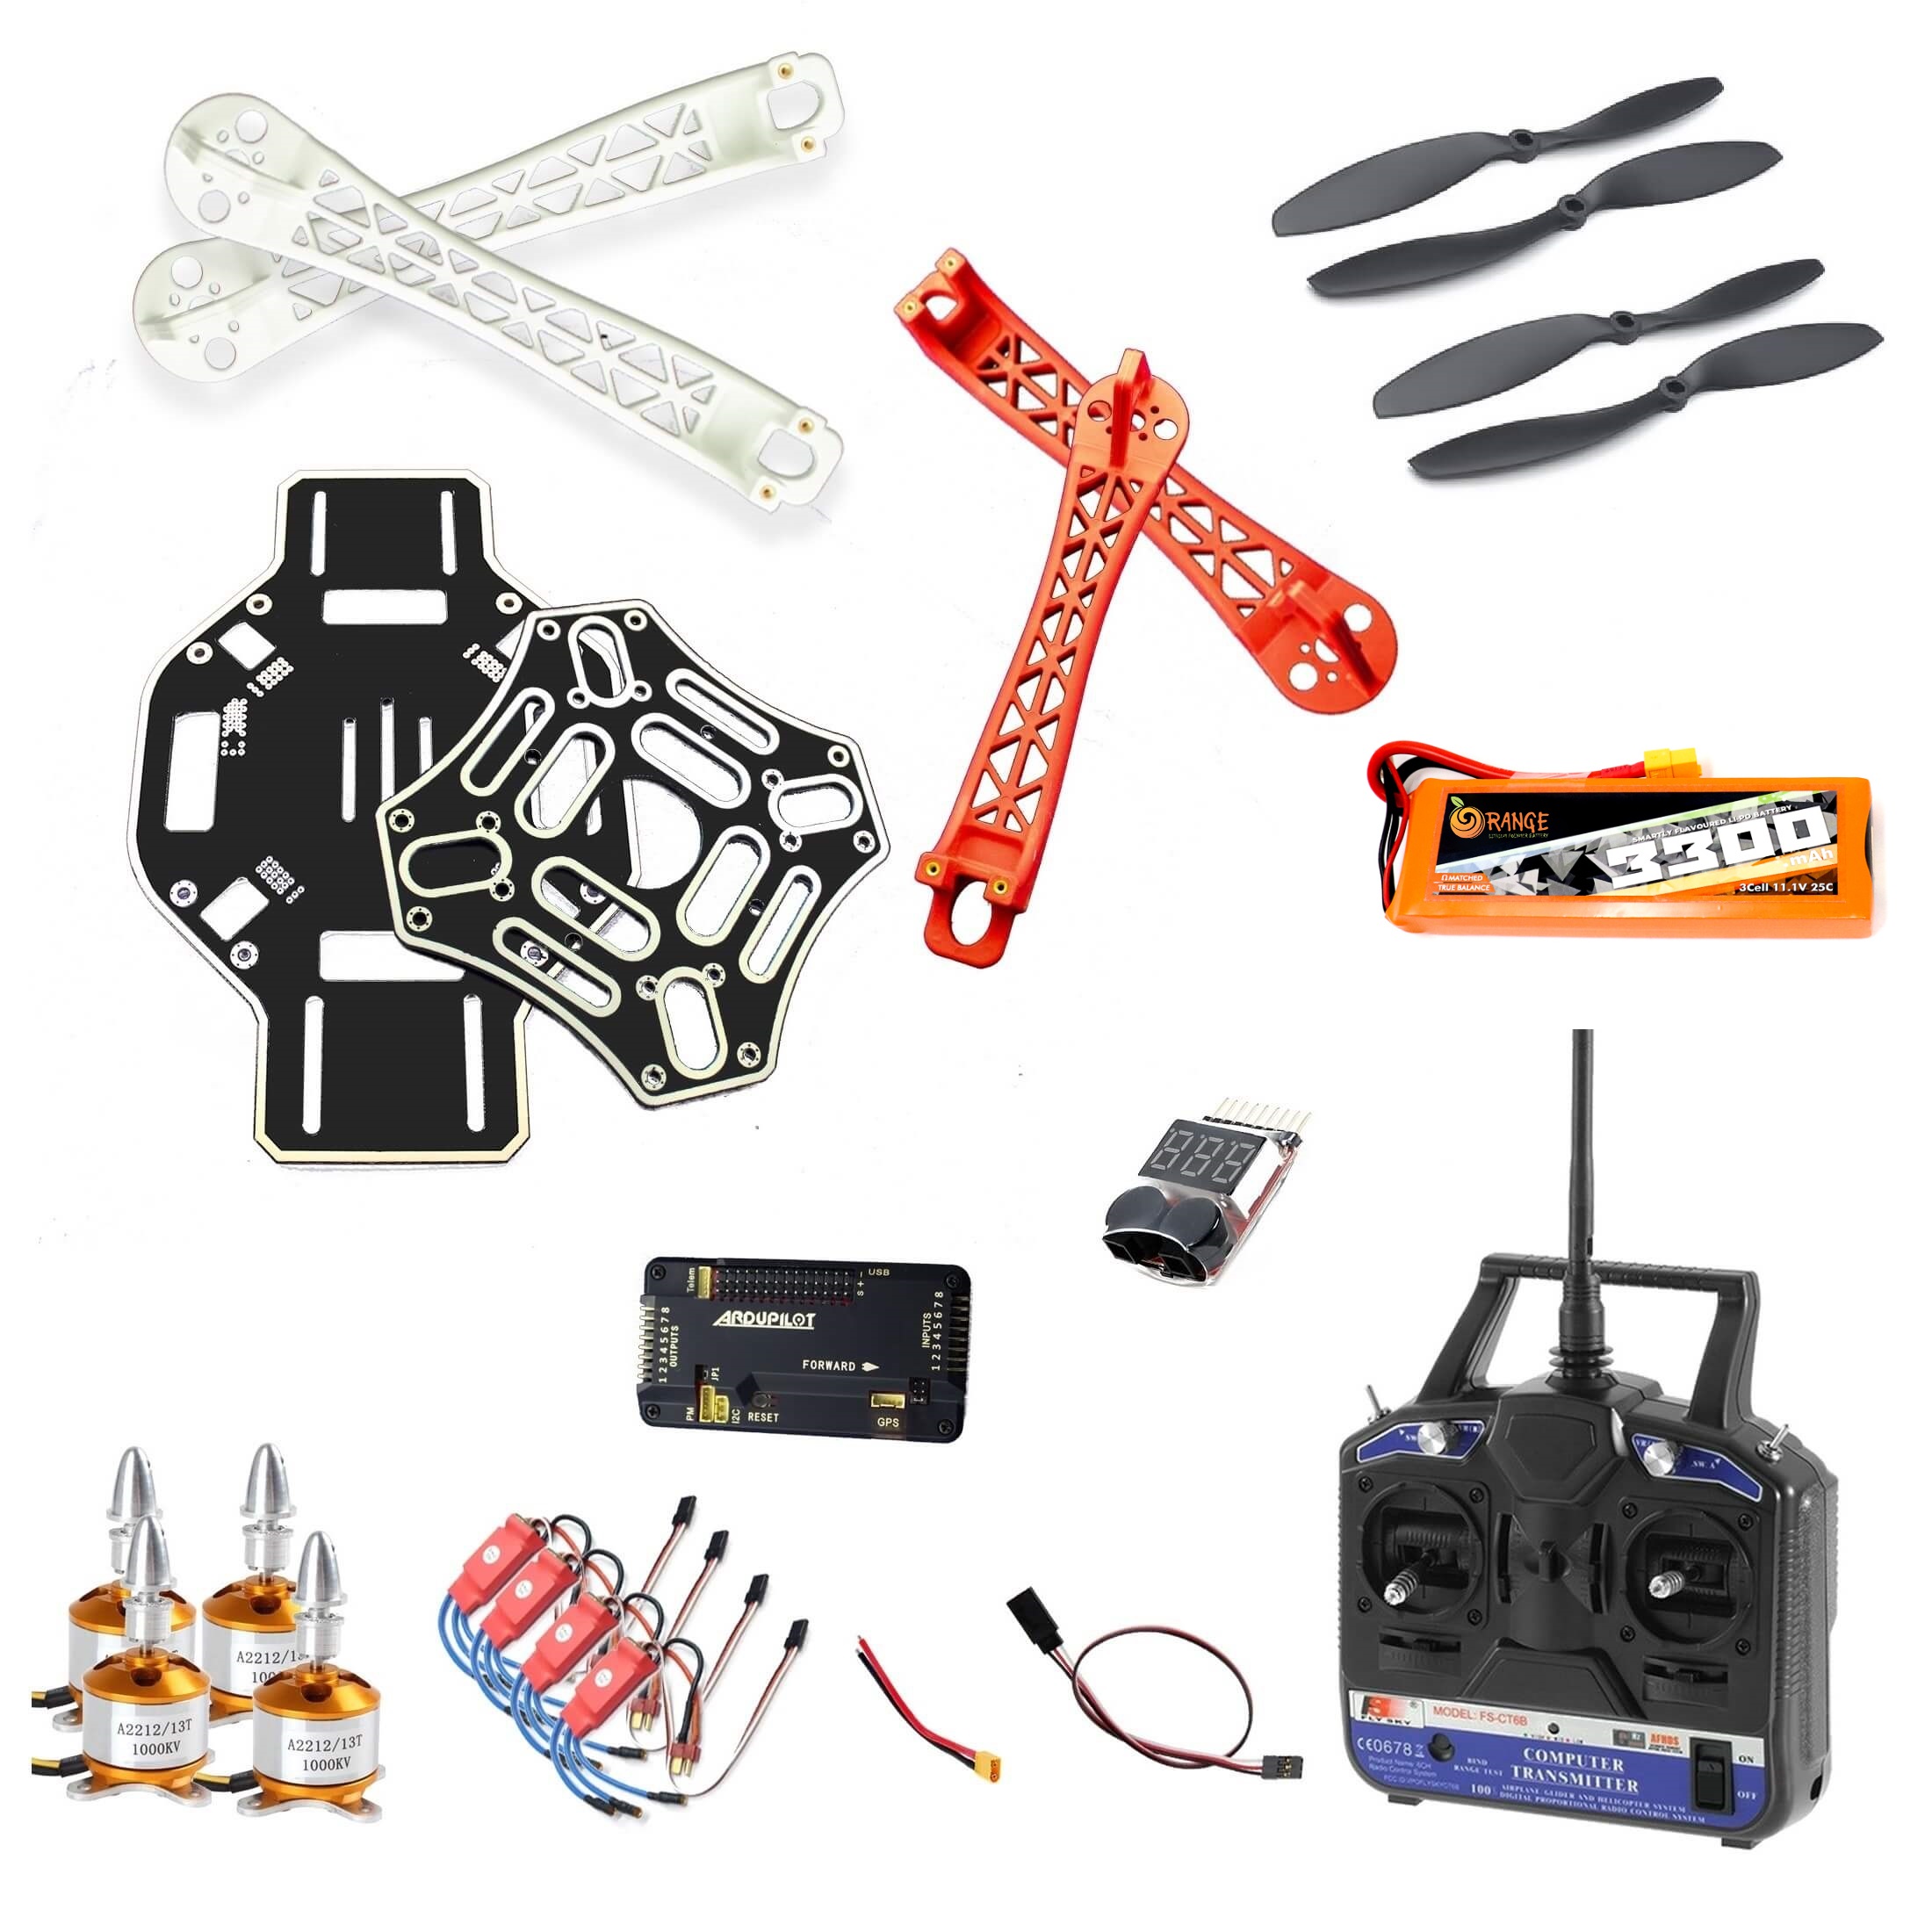 Quadcopter Kit: Buy ARF Quadcopter Kit - Economy at Best Price